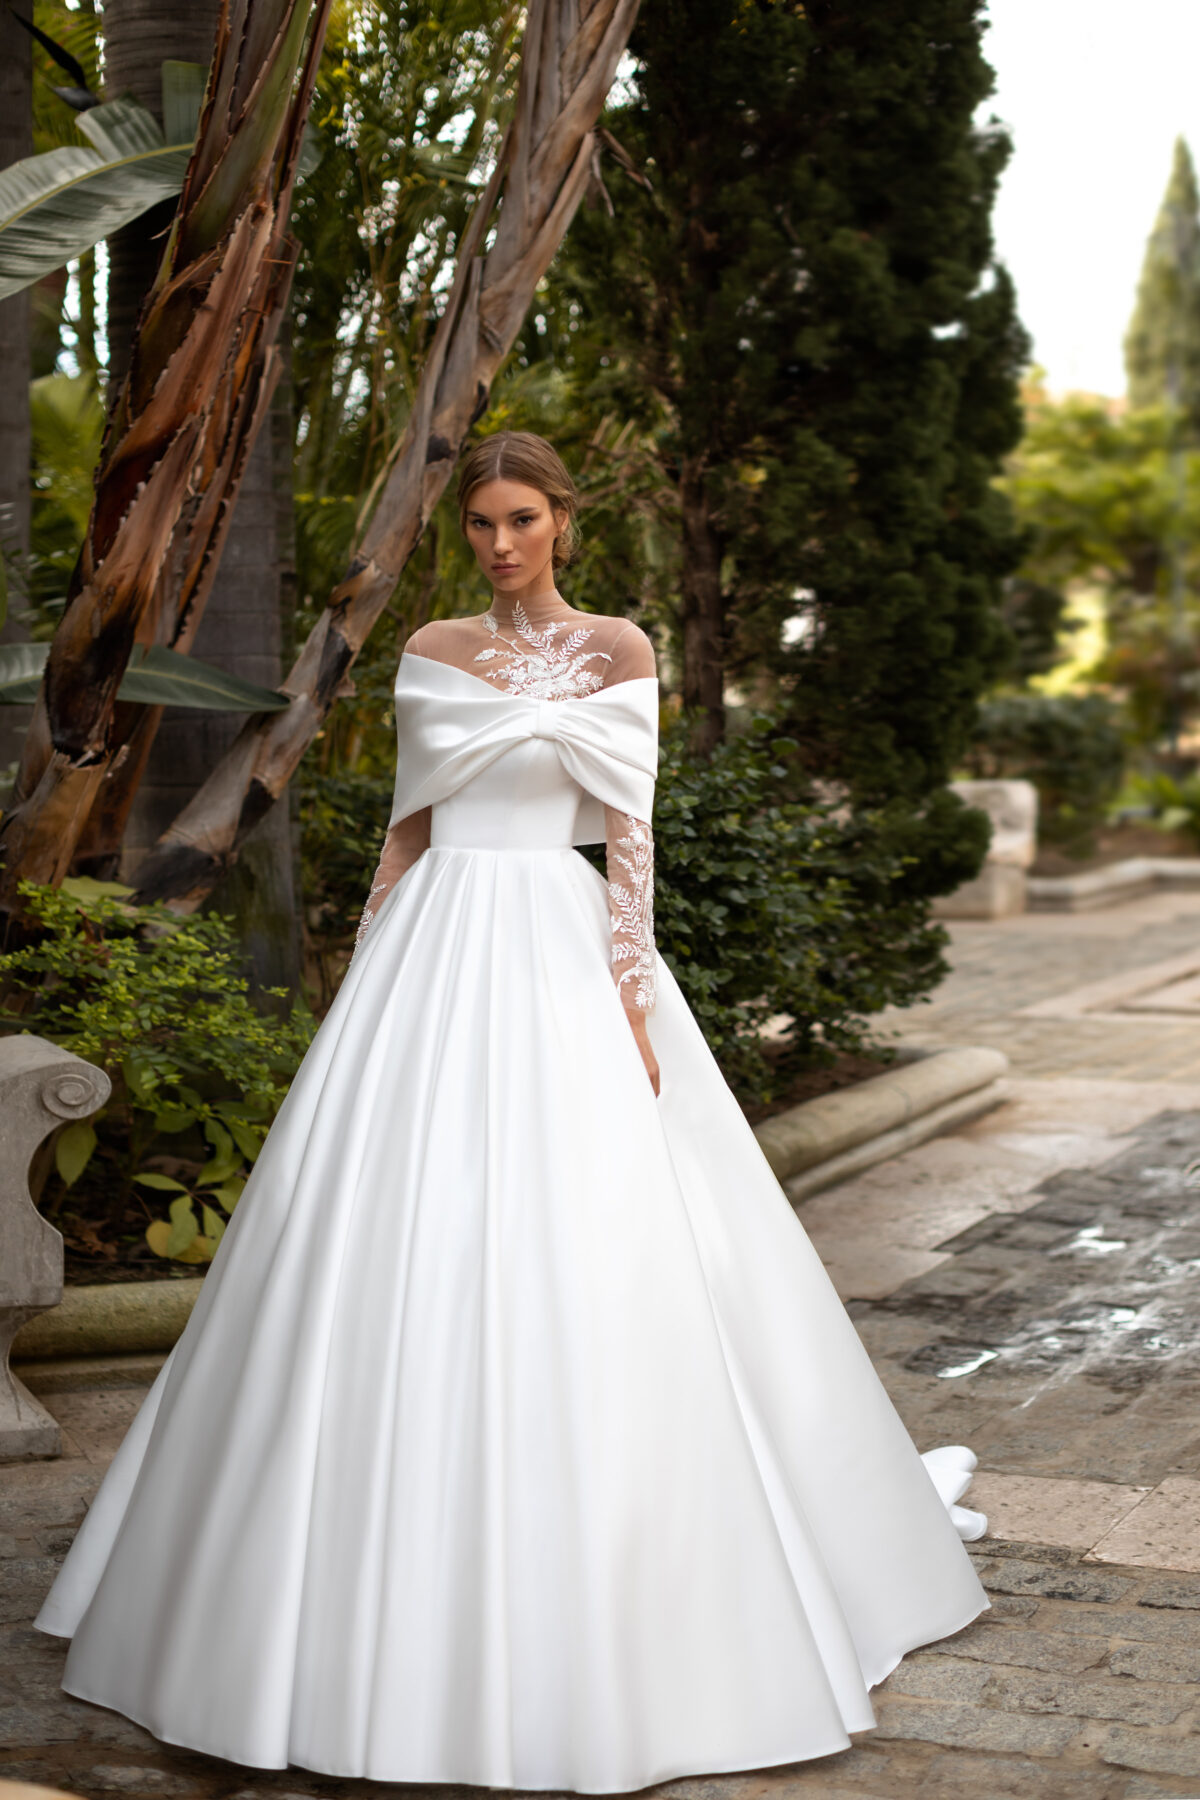 Segura by Armonia wedding dress